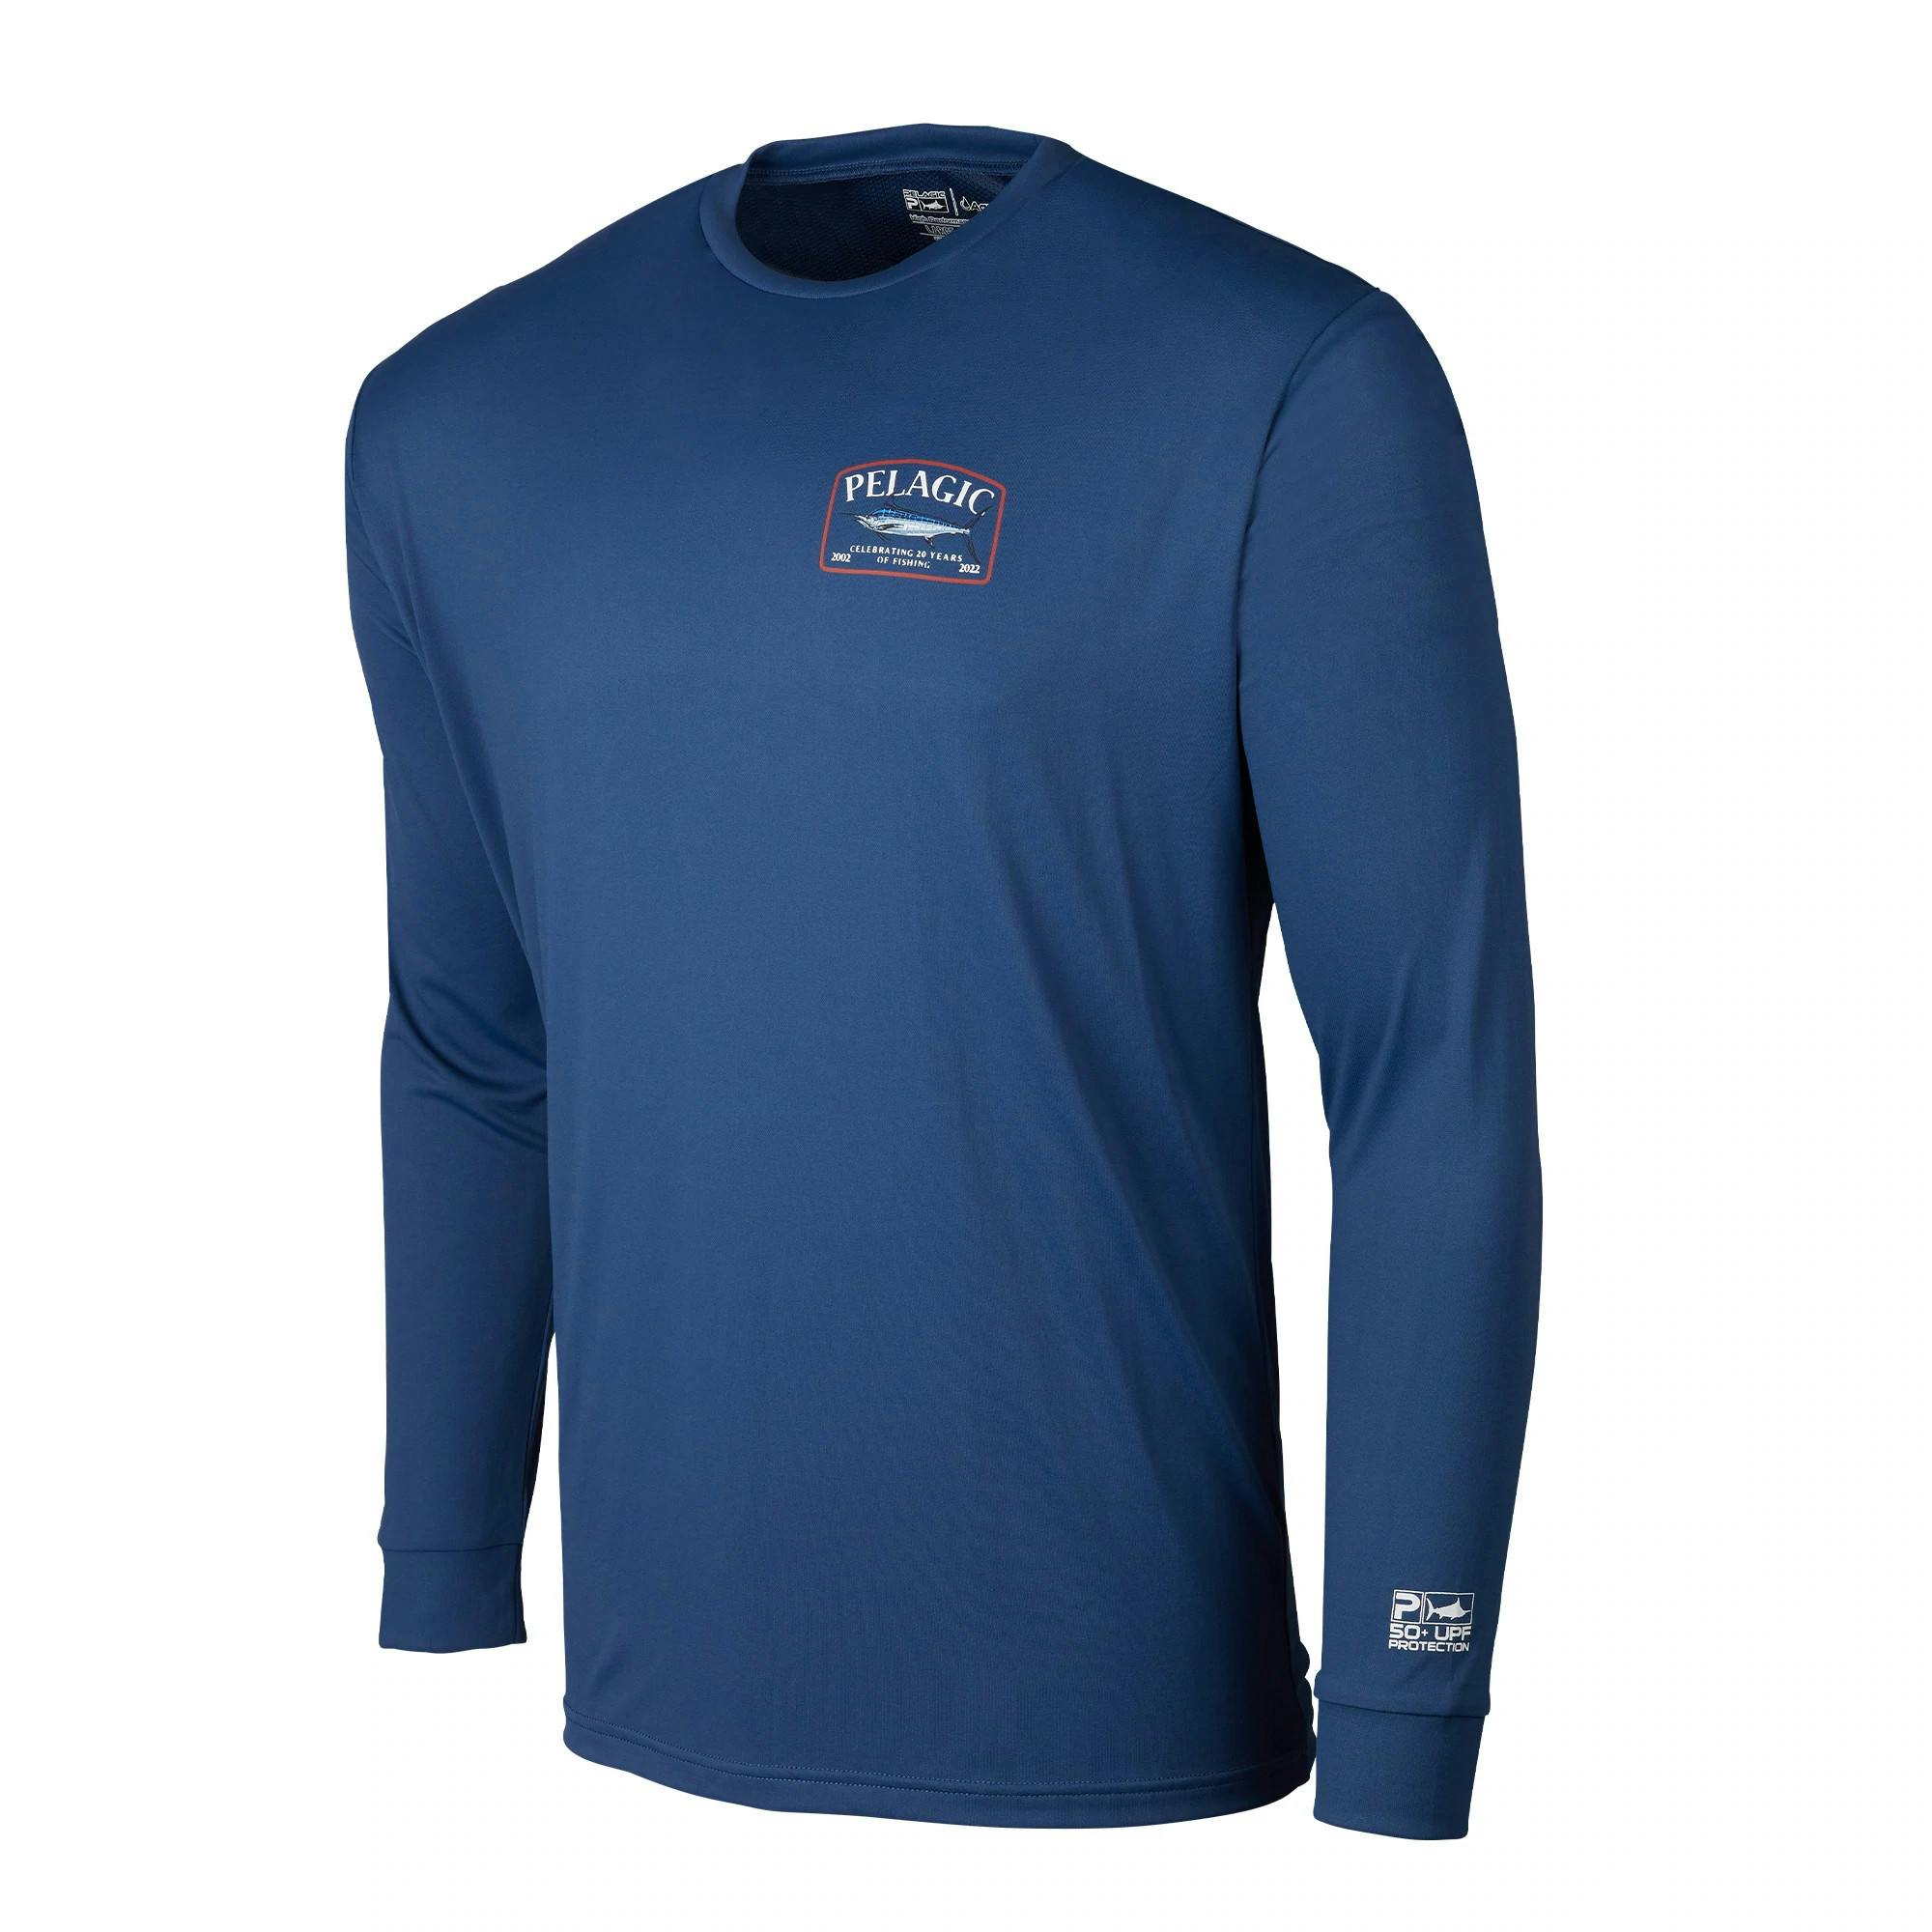 Pelagic Aquatek Game Fish Long Sleeve Performance Fishing Shirt Front - Smokey Blue